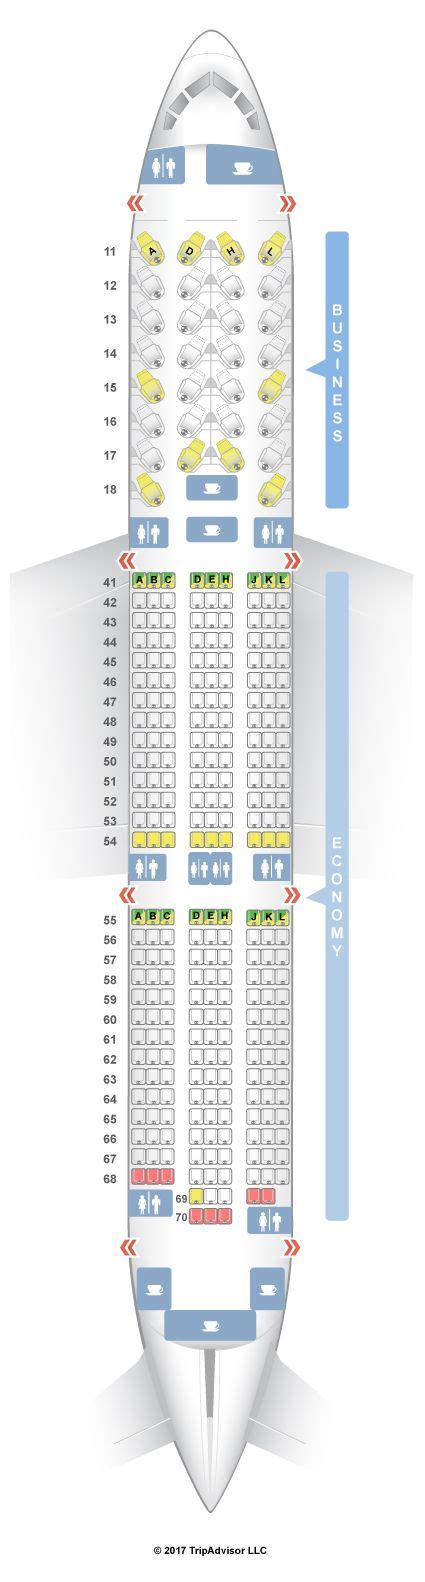 Seatguru Seat Map Xiamen Airlines Boeing 787 9 789 Seatguru Air